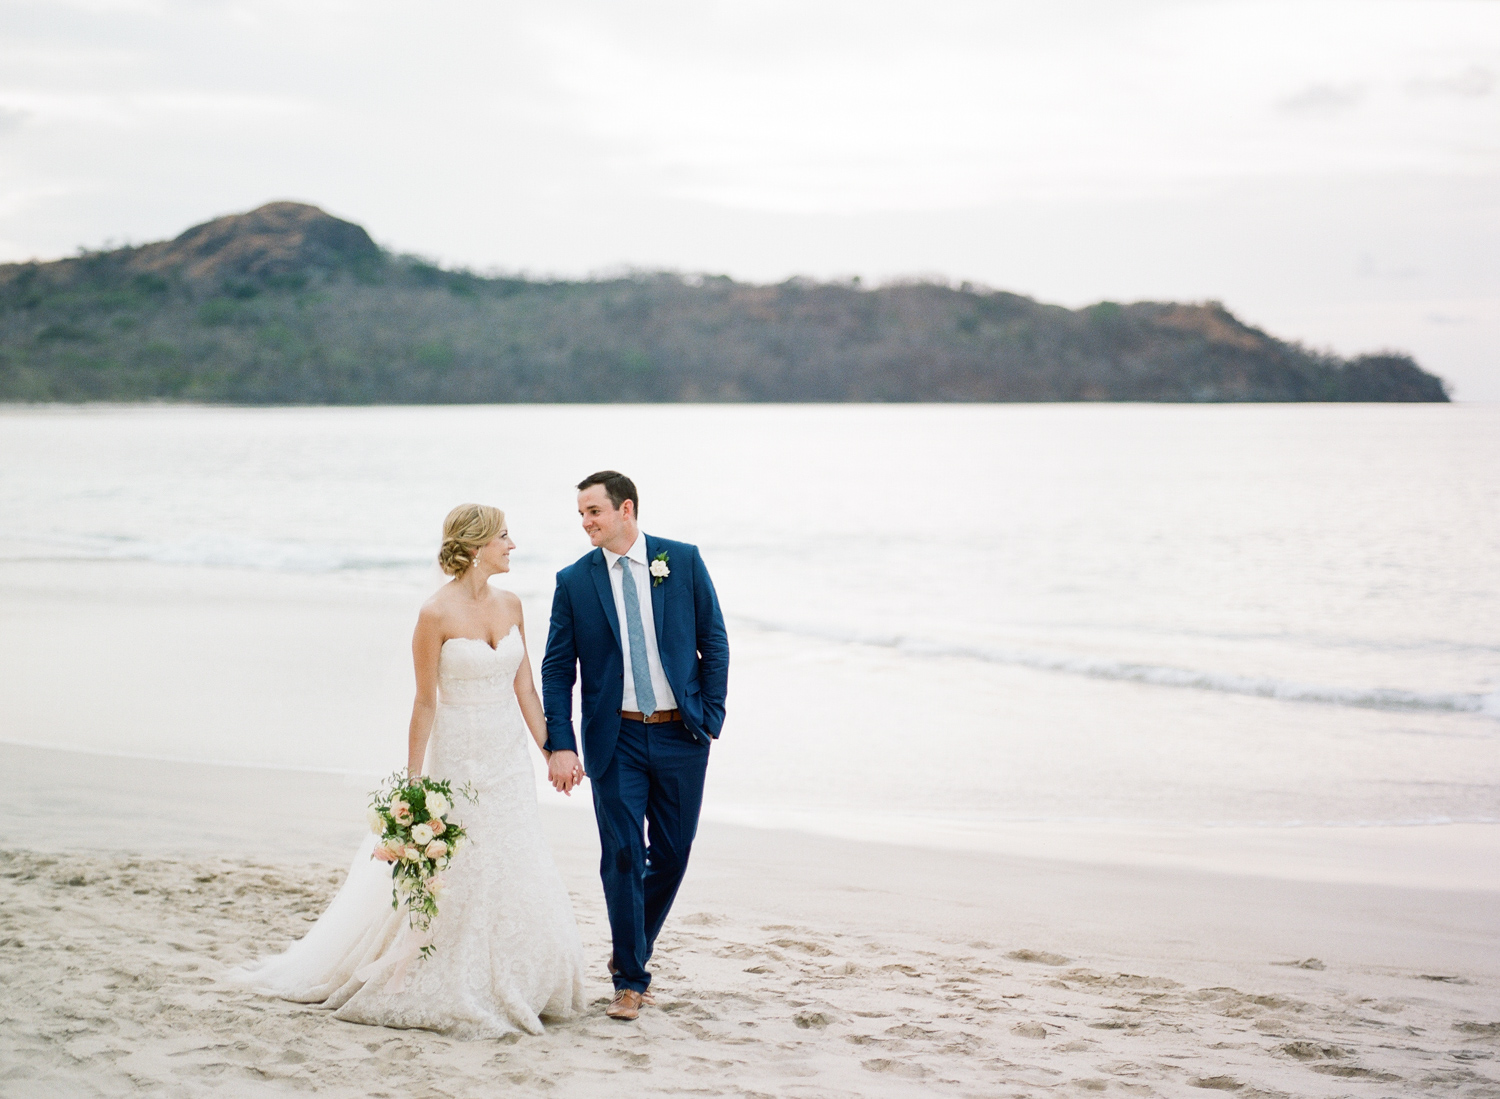 Costa Rica Destination Wedding Film Photography - Erin and Drew Part 1 ...